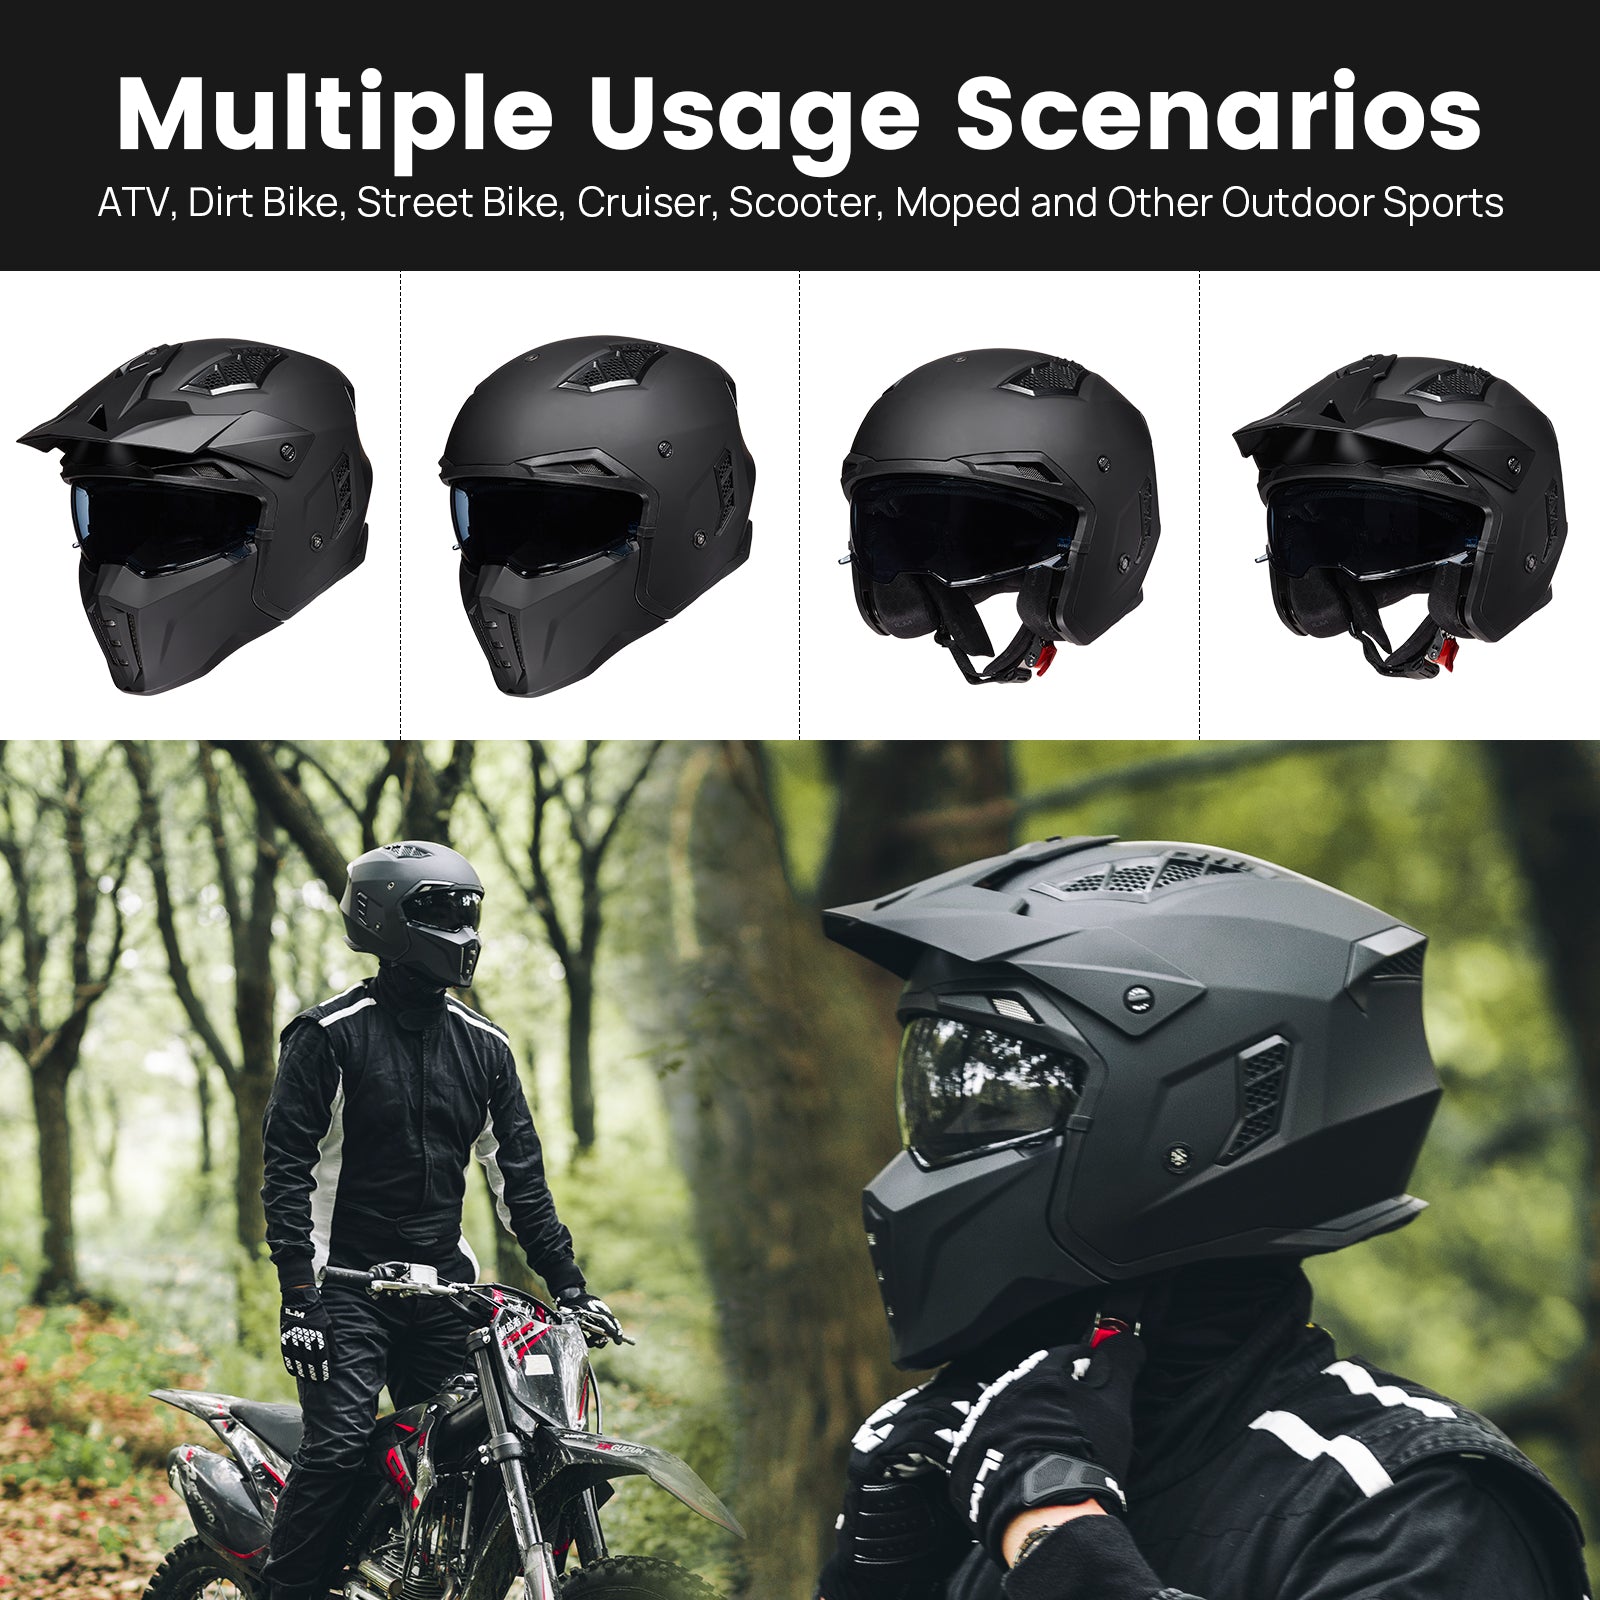 ILM Open Face Motorcycle 3/4 Half Helmet Model Z302